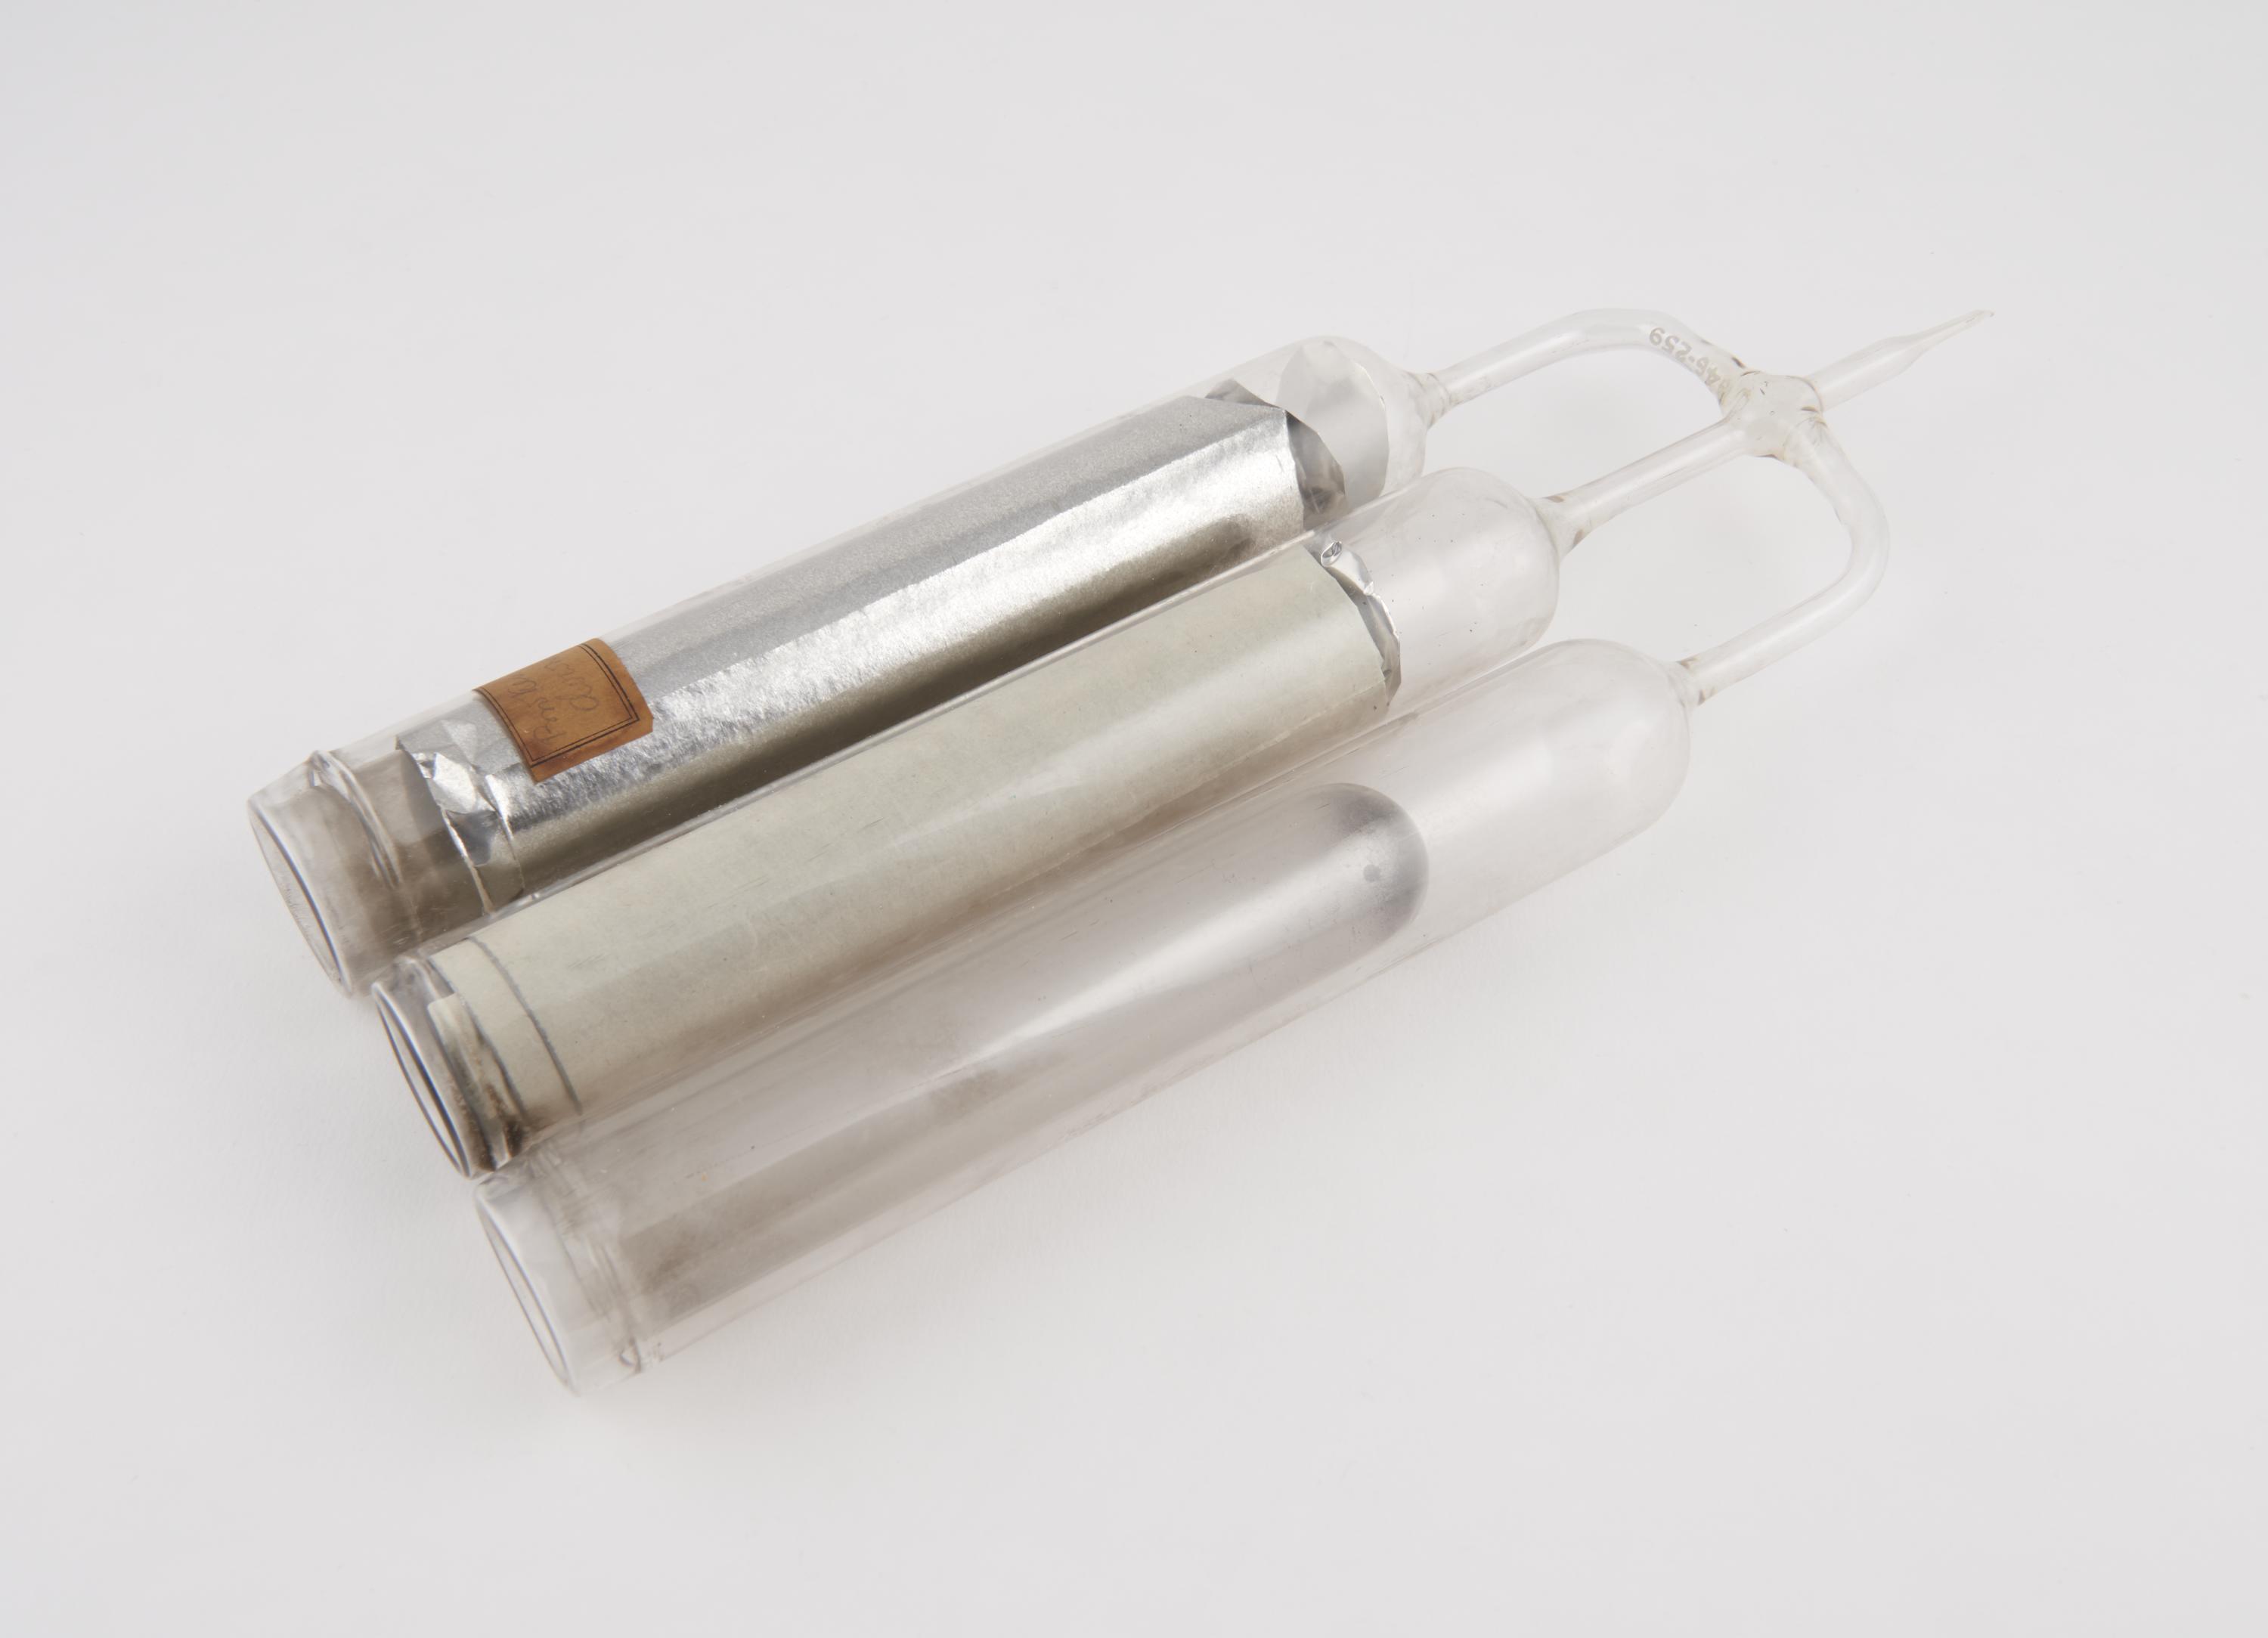 Vacuum flasks from Sir James Dewar's research vacuum apparatus.